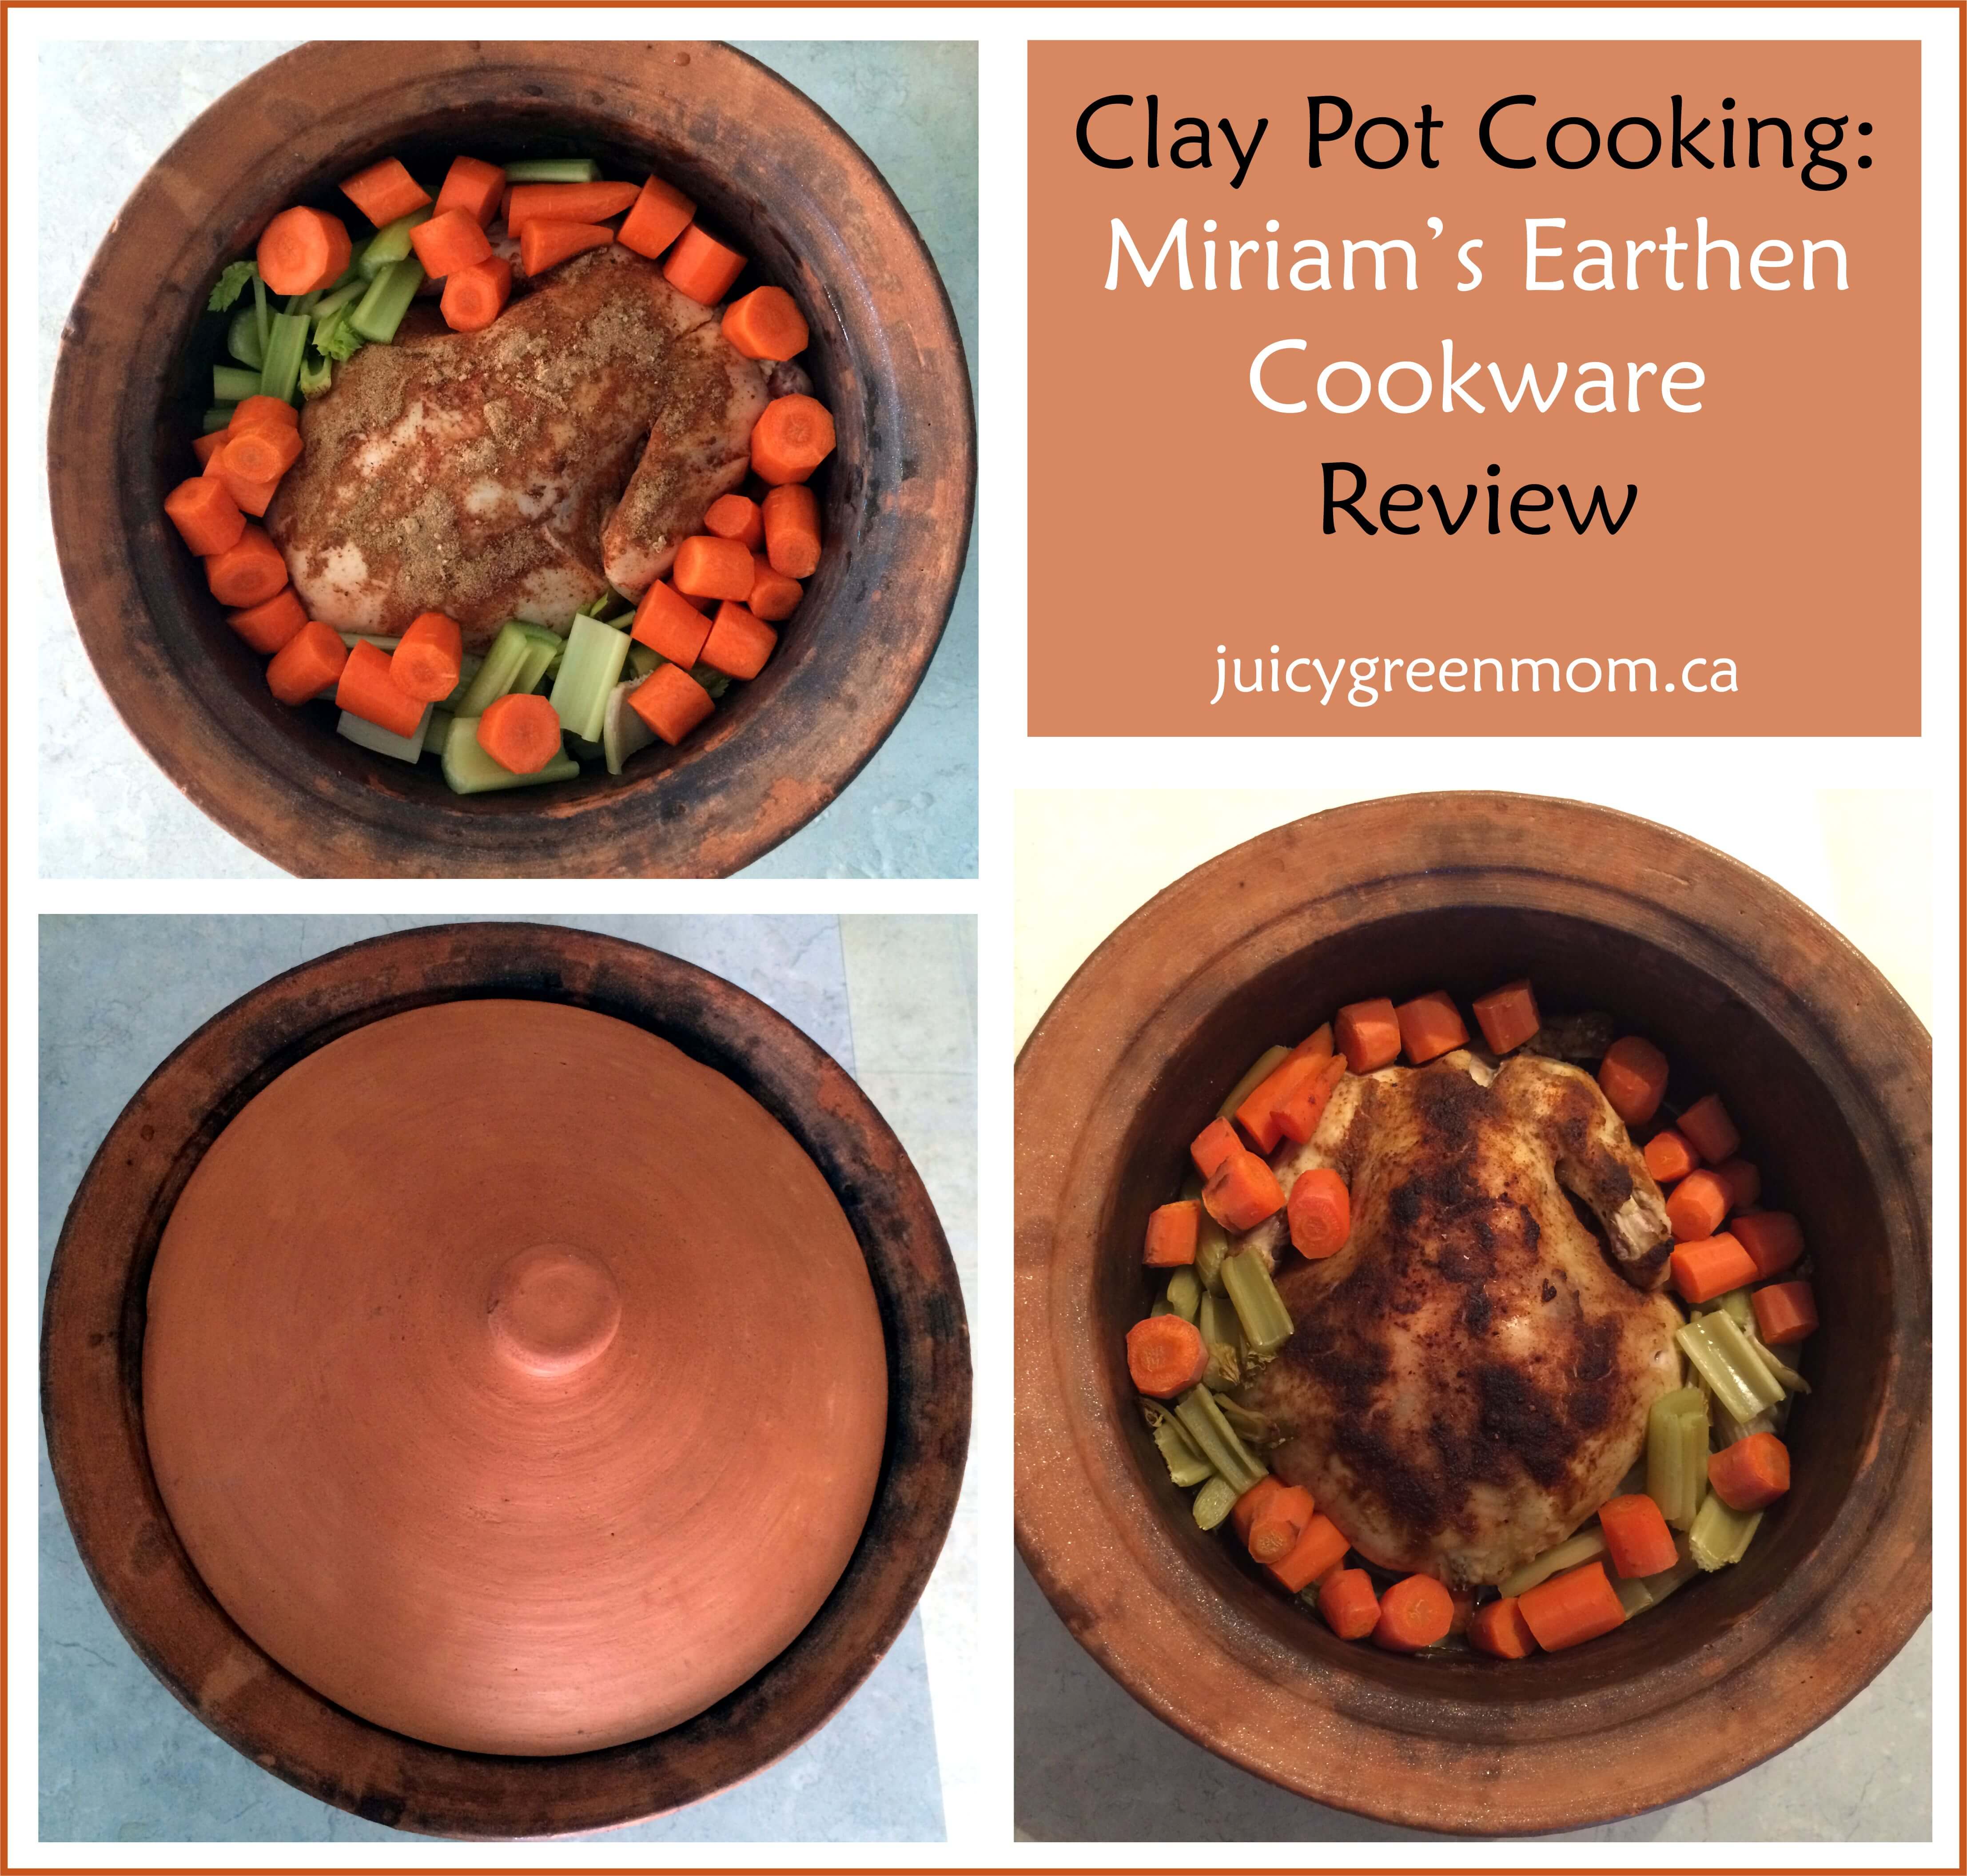 https://juicygreenmom.ca/wp-content/uploads/2015/04/clay-pot-cooking-MEC-review-juicygreenmom.jpg